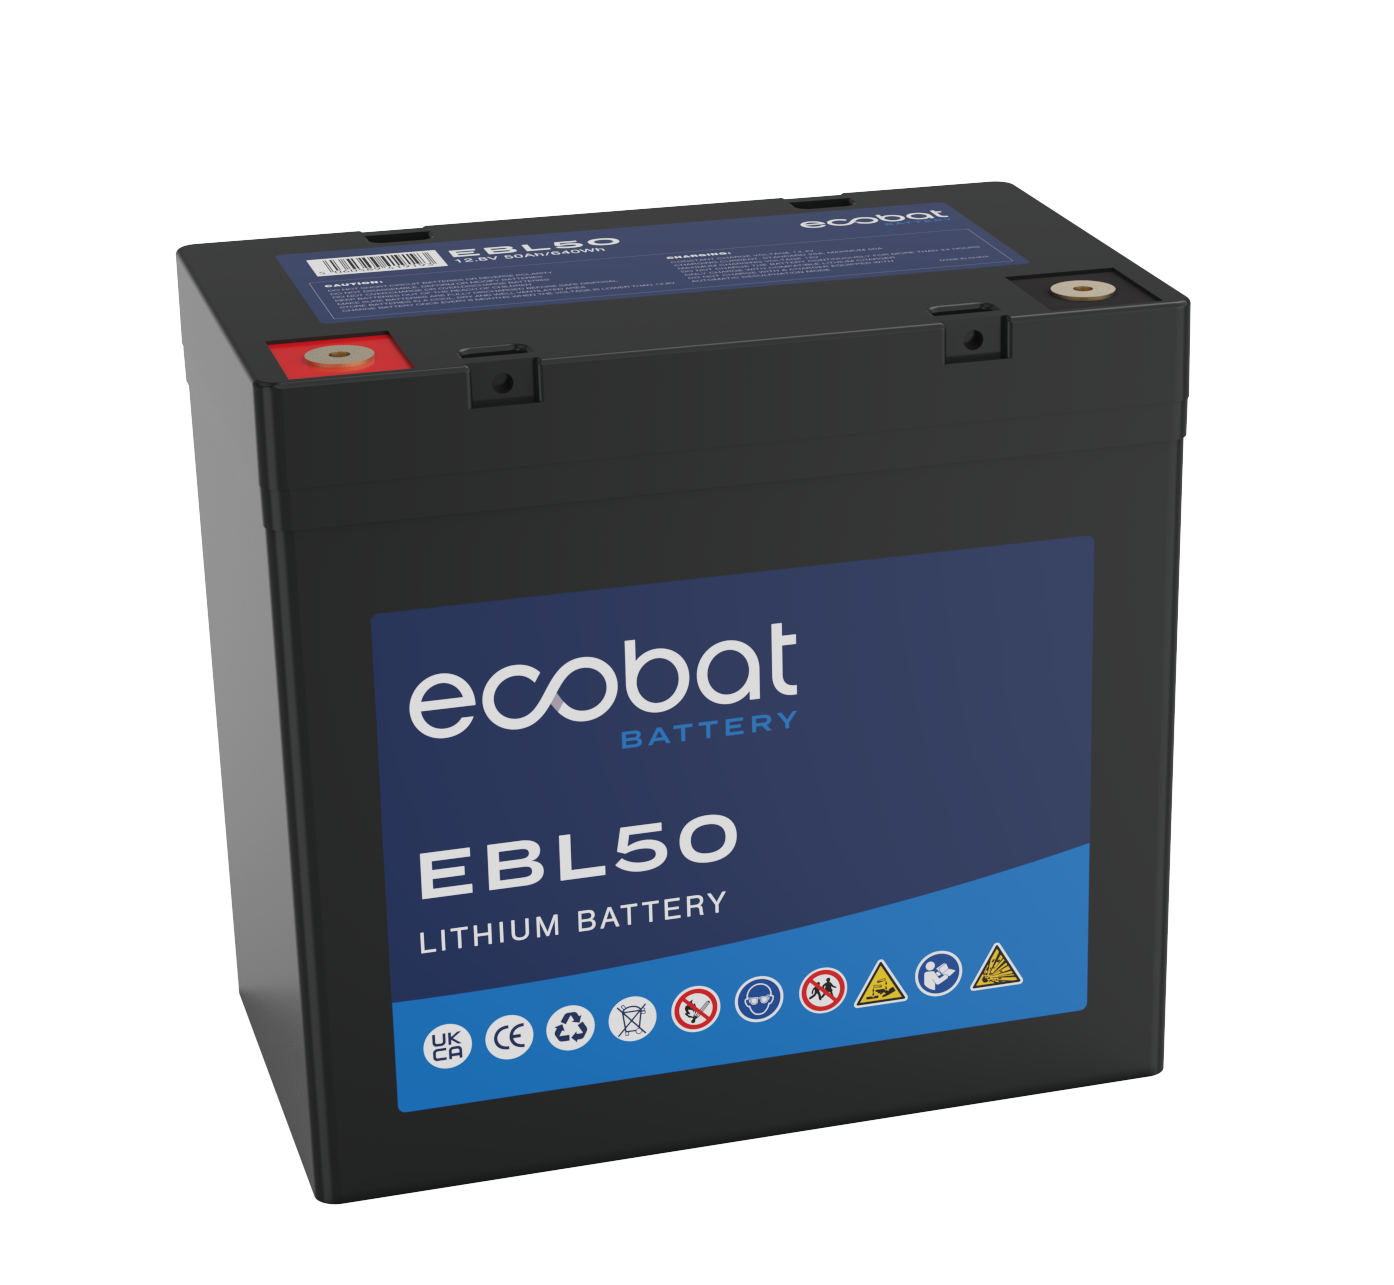 Ecobat EBL50 Lithium Leisure Battery